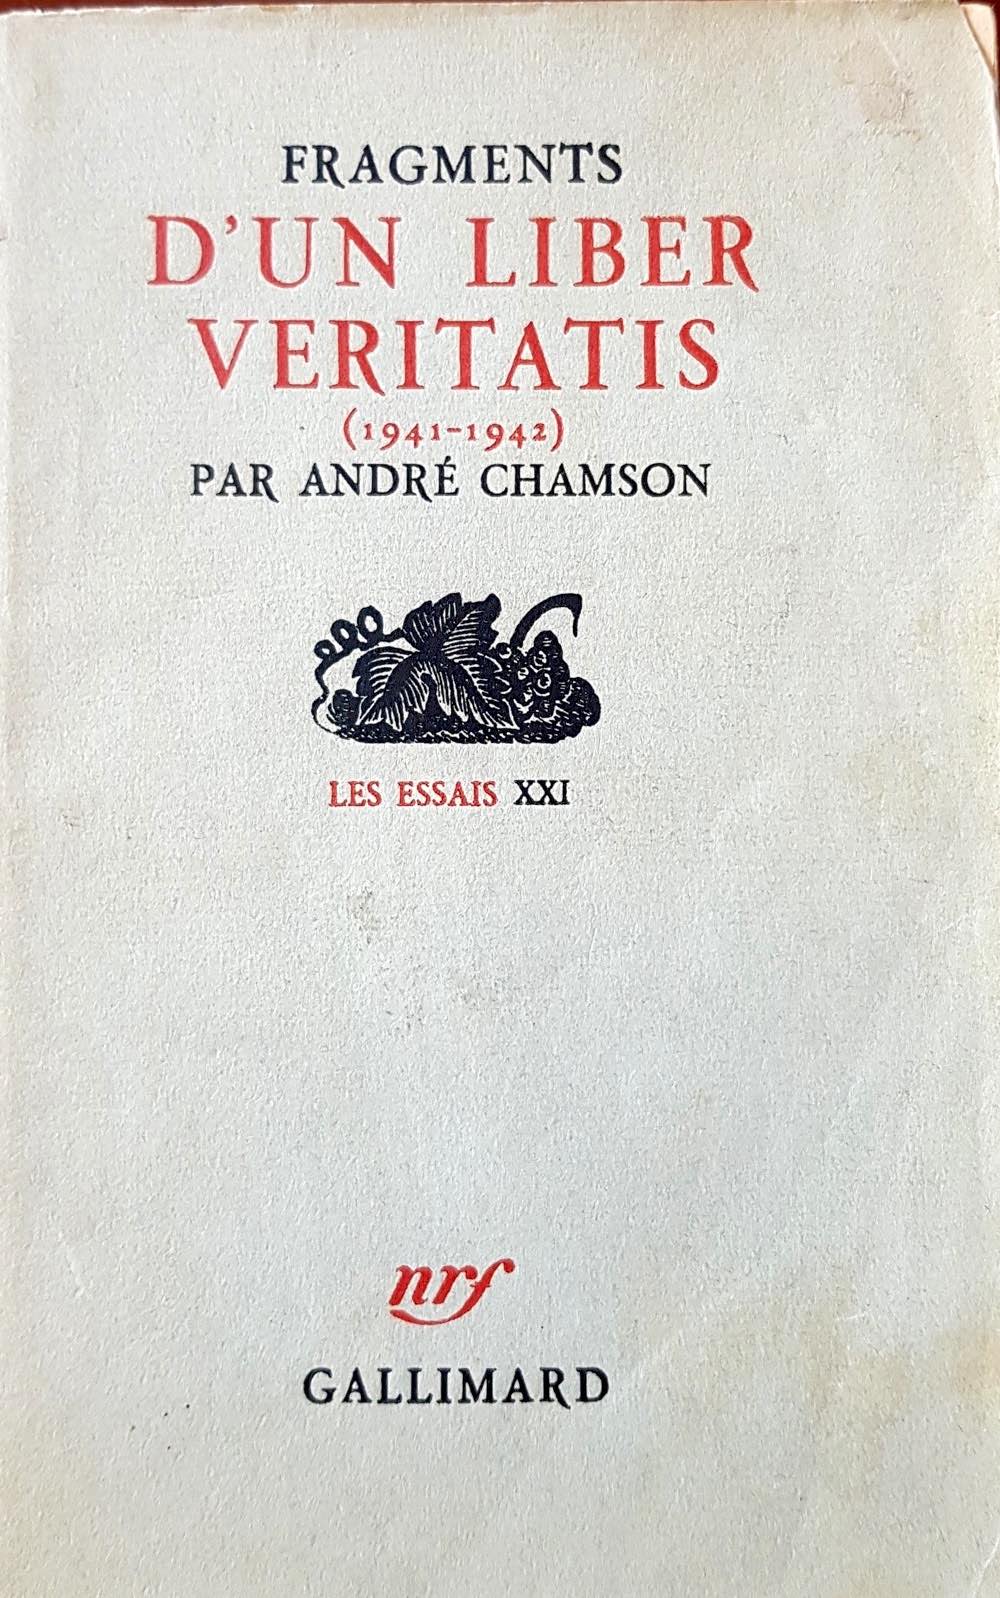 Fragments d’un liber veritatis - Gallimard 1946